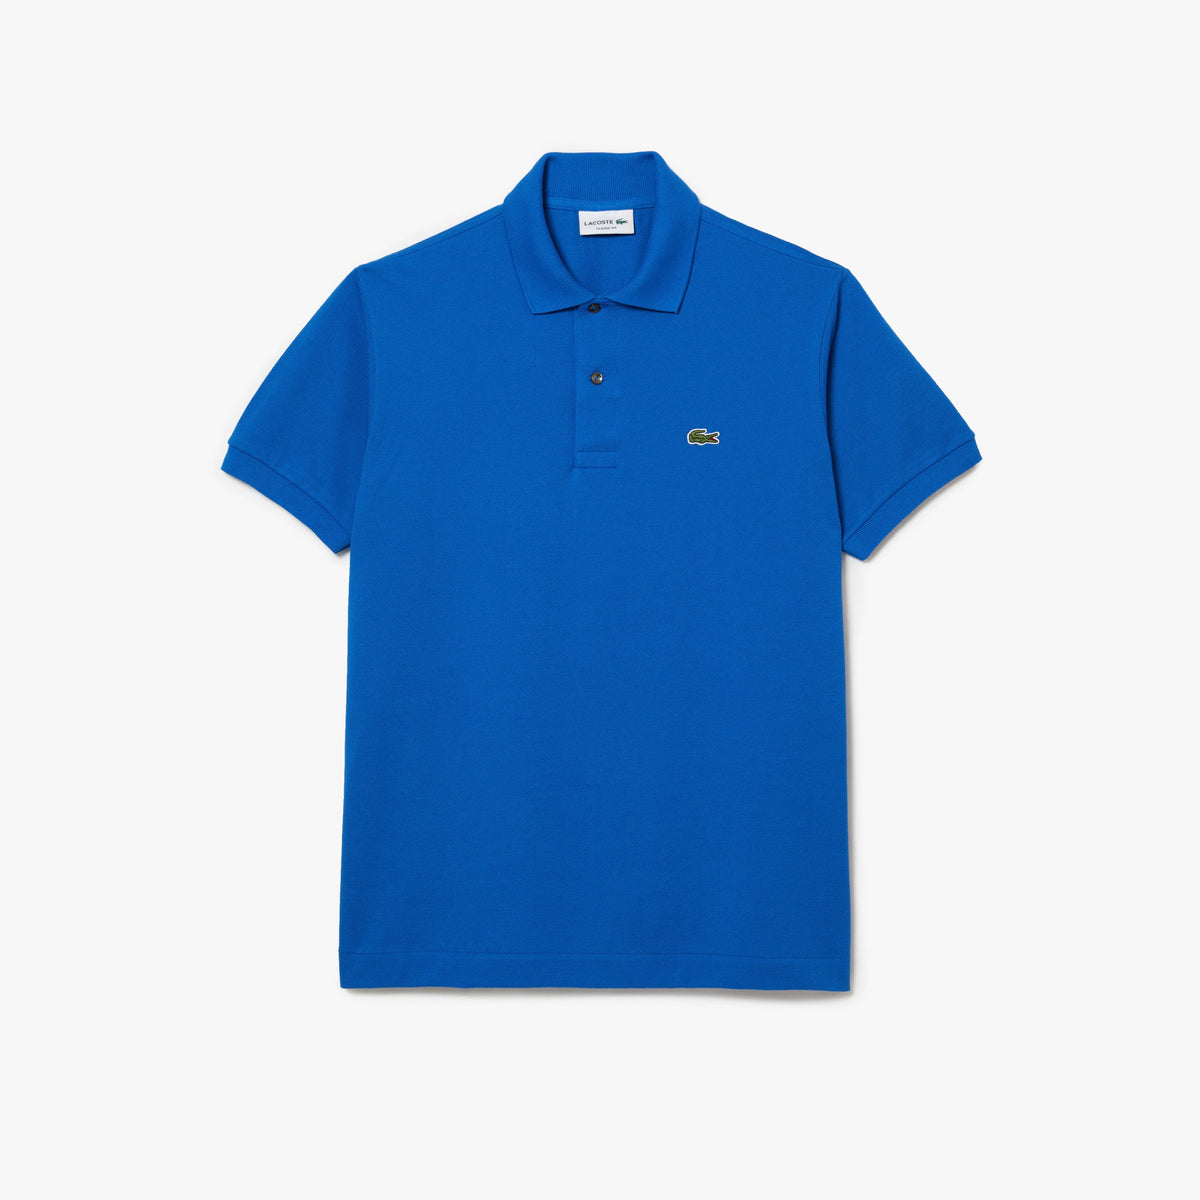 Lacoste - Classic Fit Polo Shirt - Blue KXB